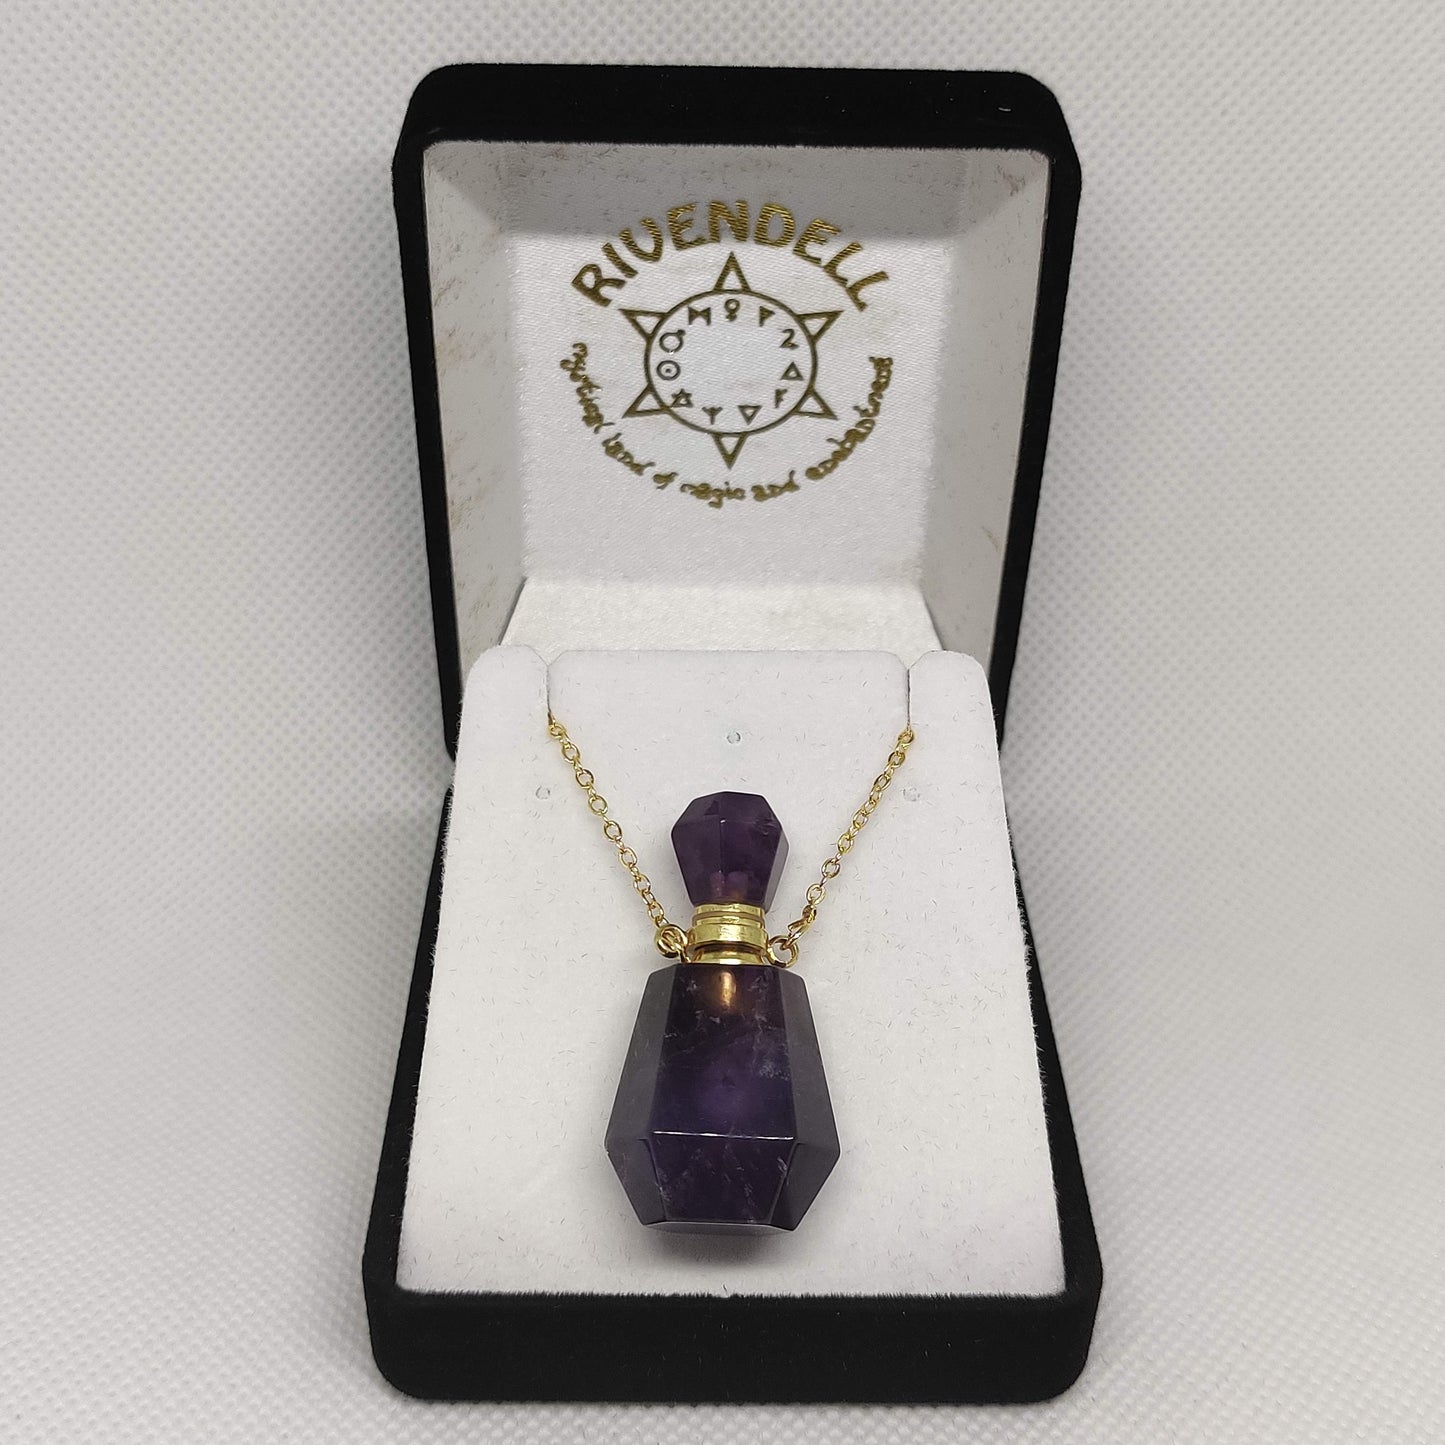 Dark Amethyst Crystal Mini Perfume Bottle Necklace - Rivendell Shop